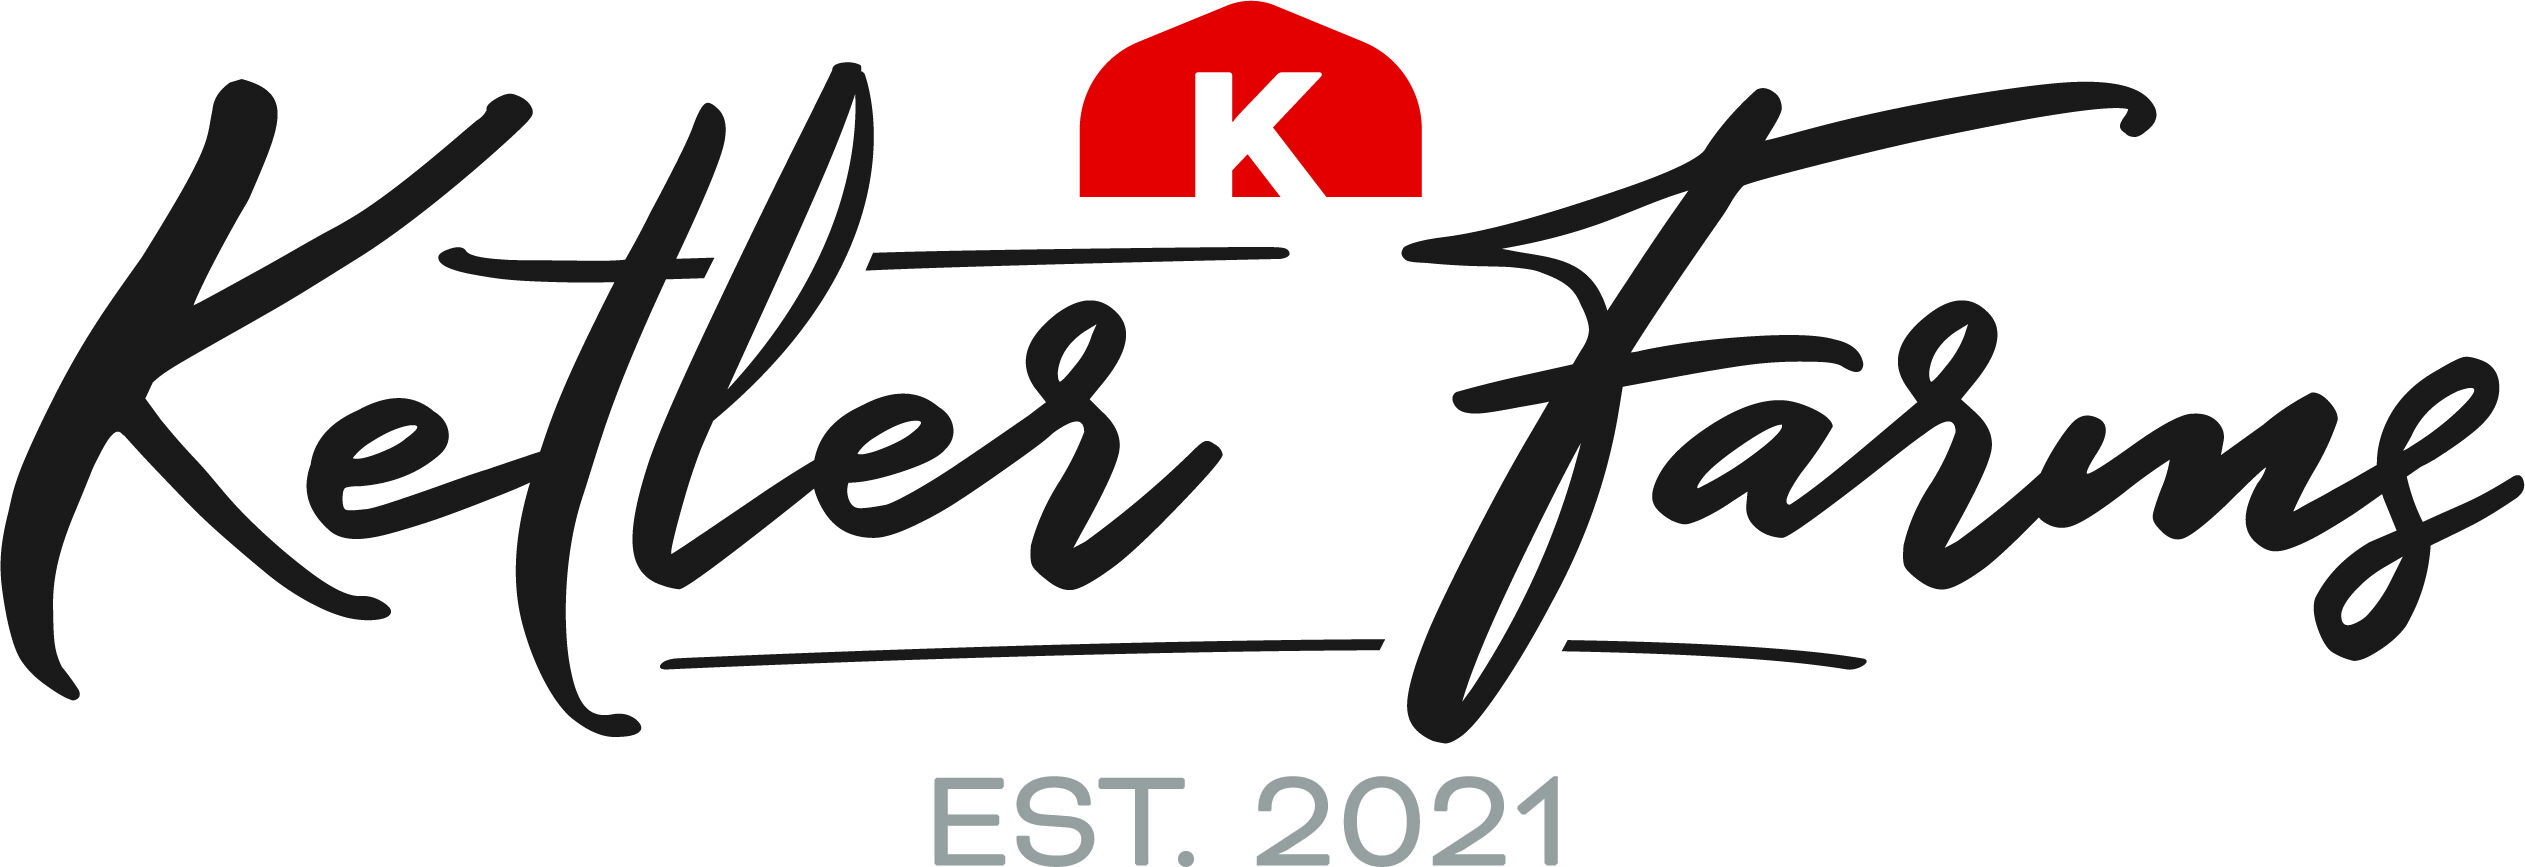 Ketler Farms